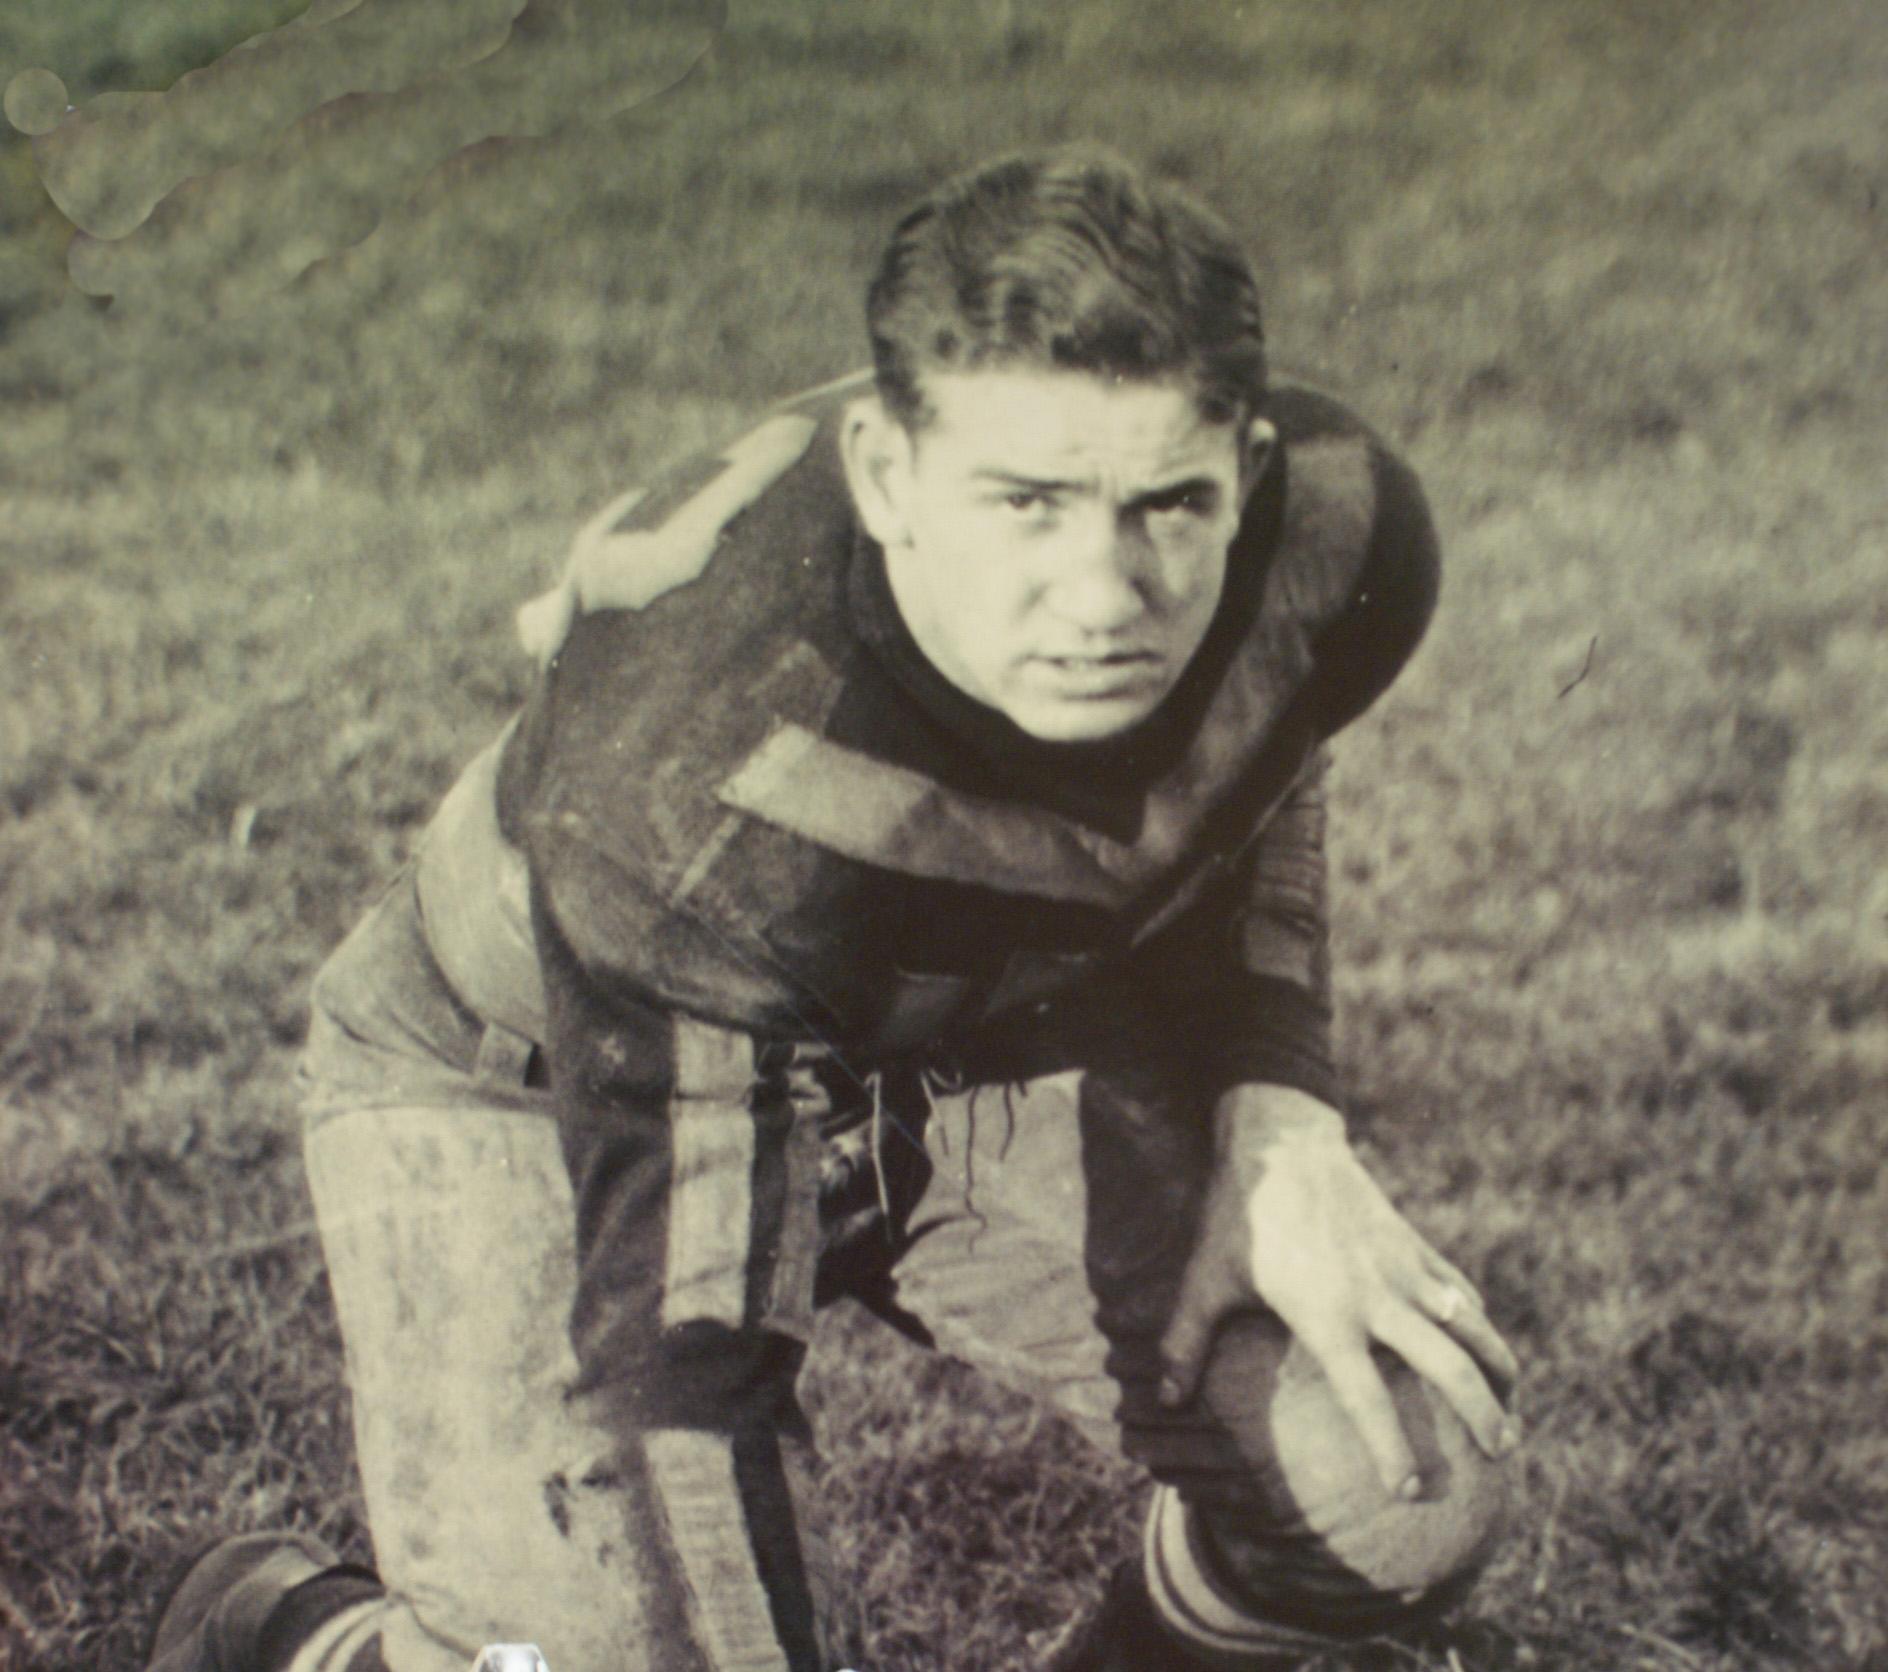 old photo of Ohio State football player sepia tone